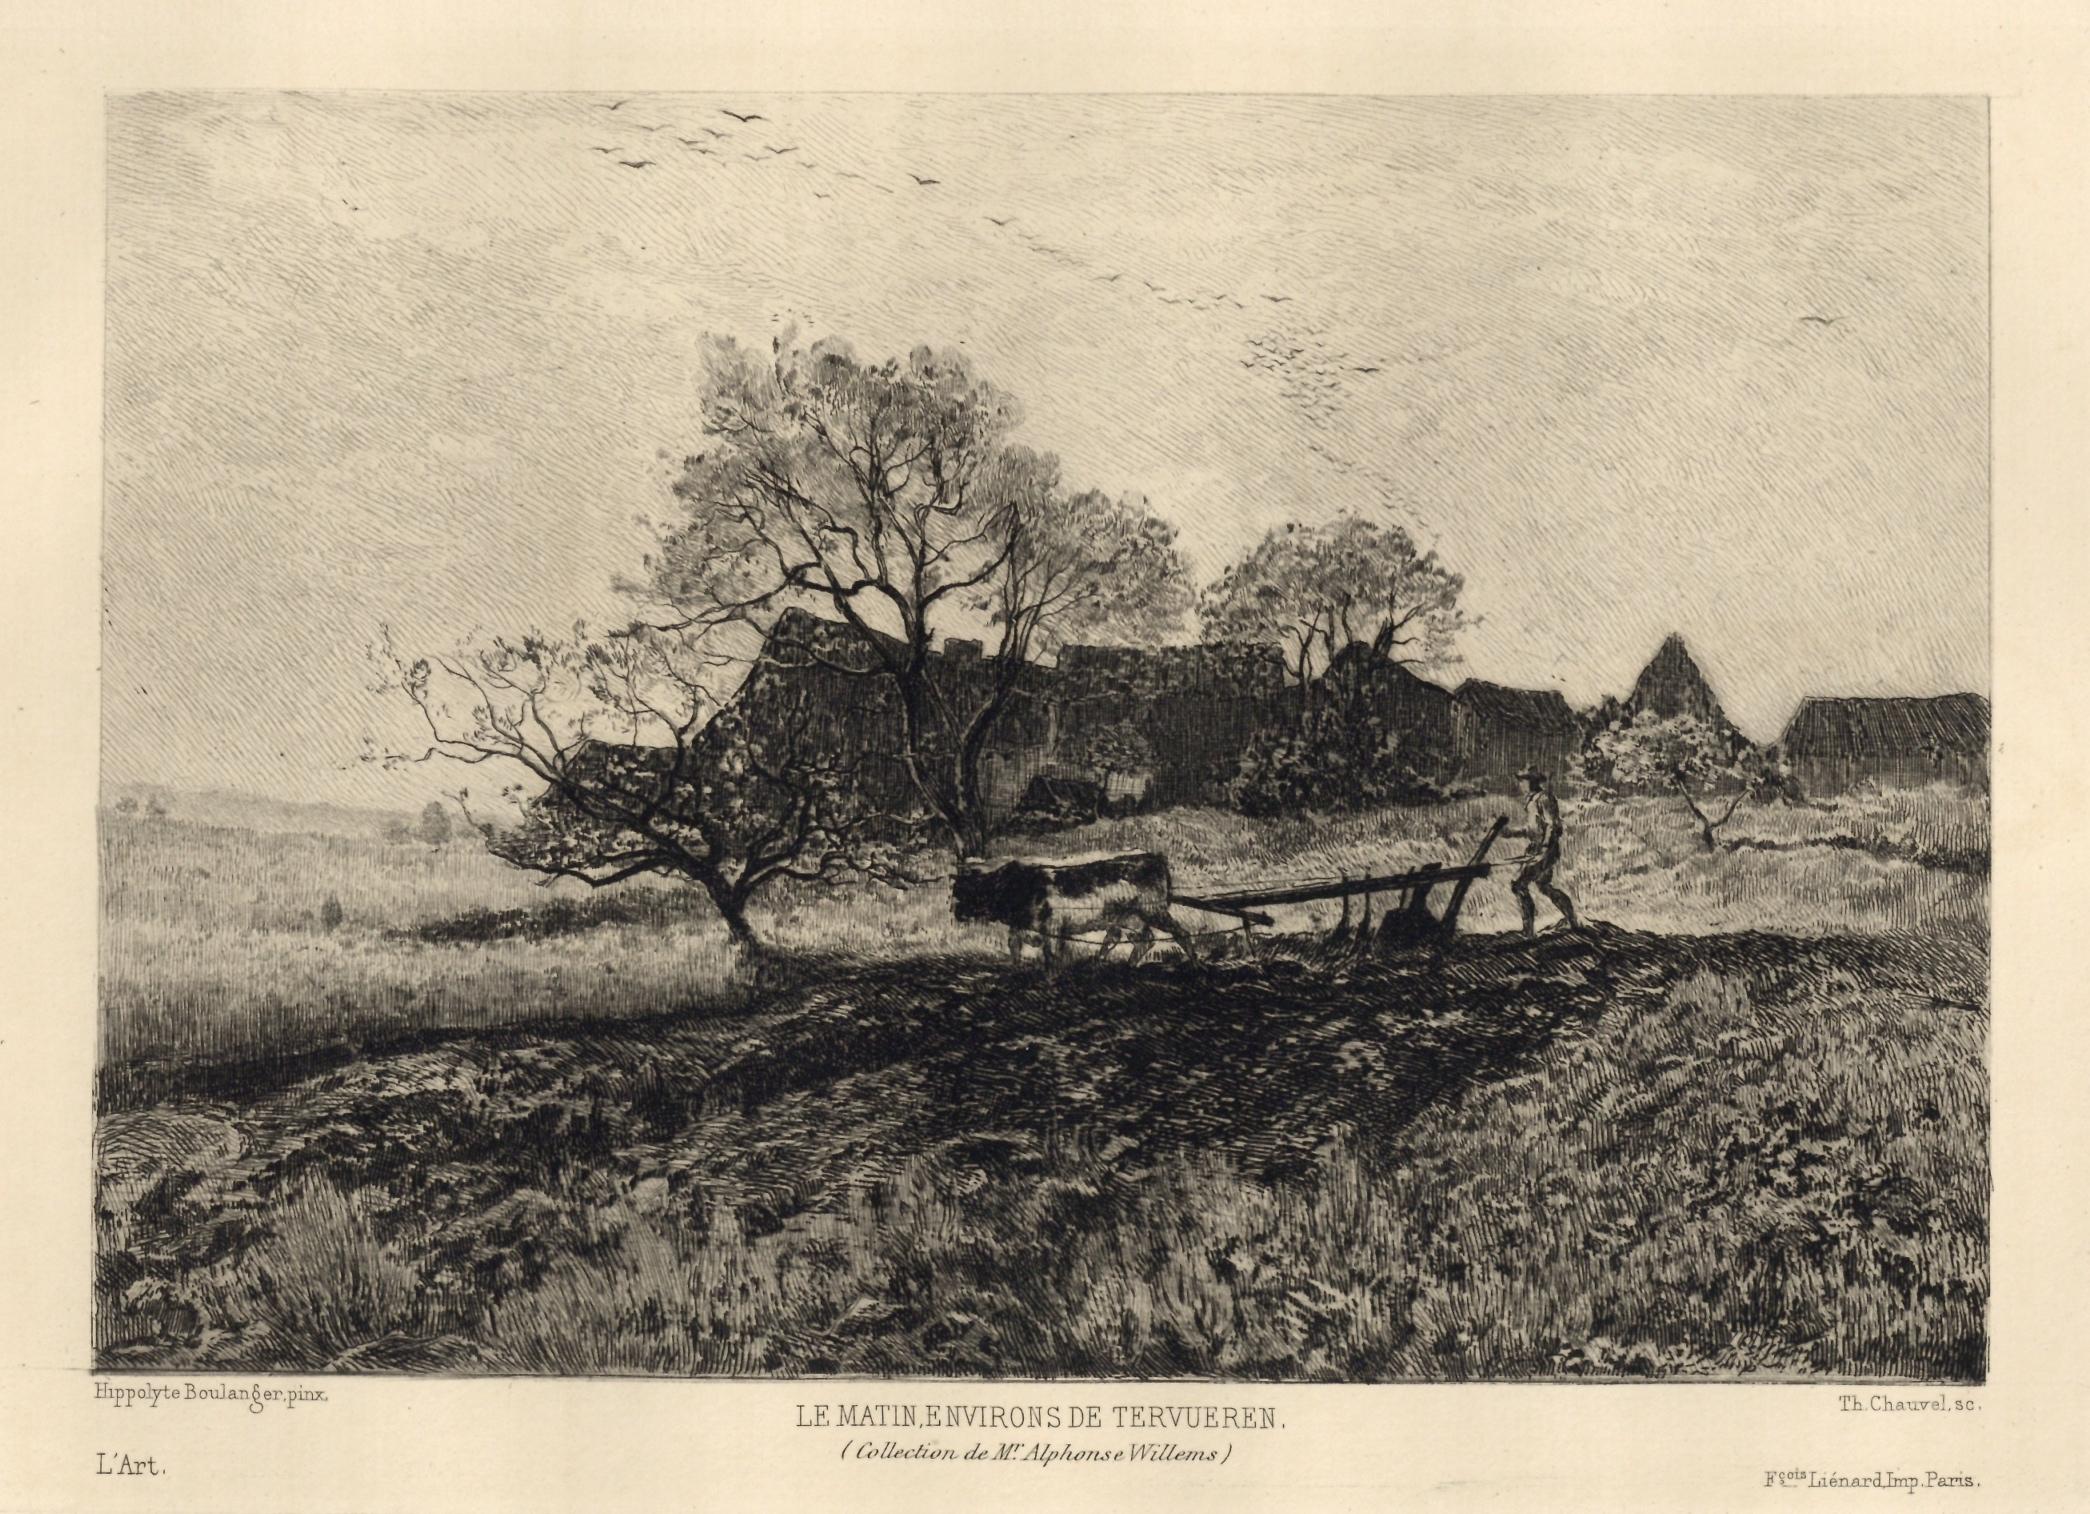 "Le matin environs de Tervueren" etching - Print by Theophile Narcisse Chauvel